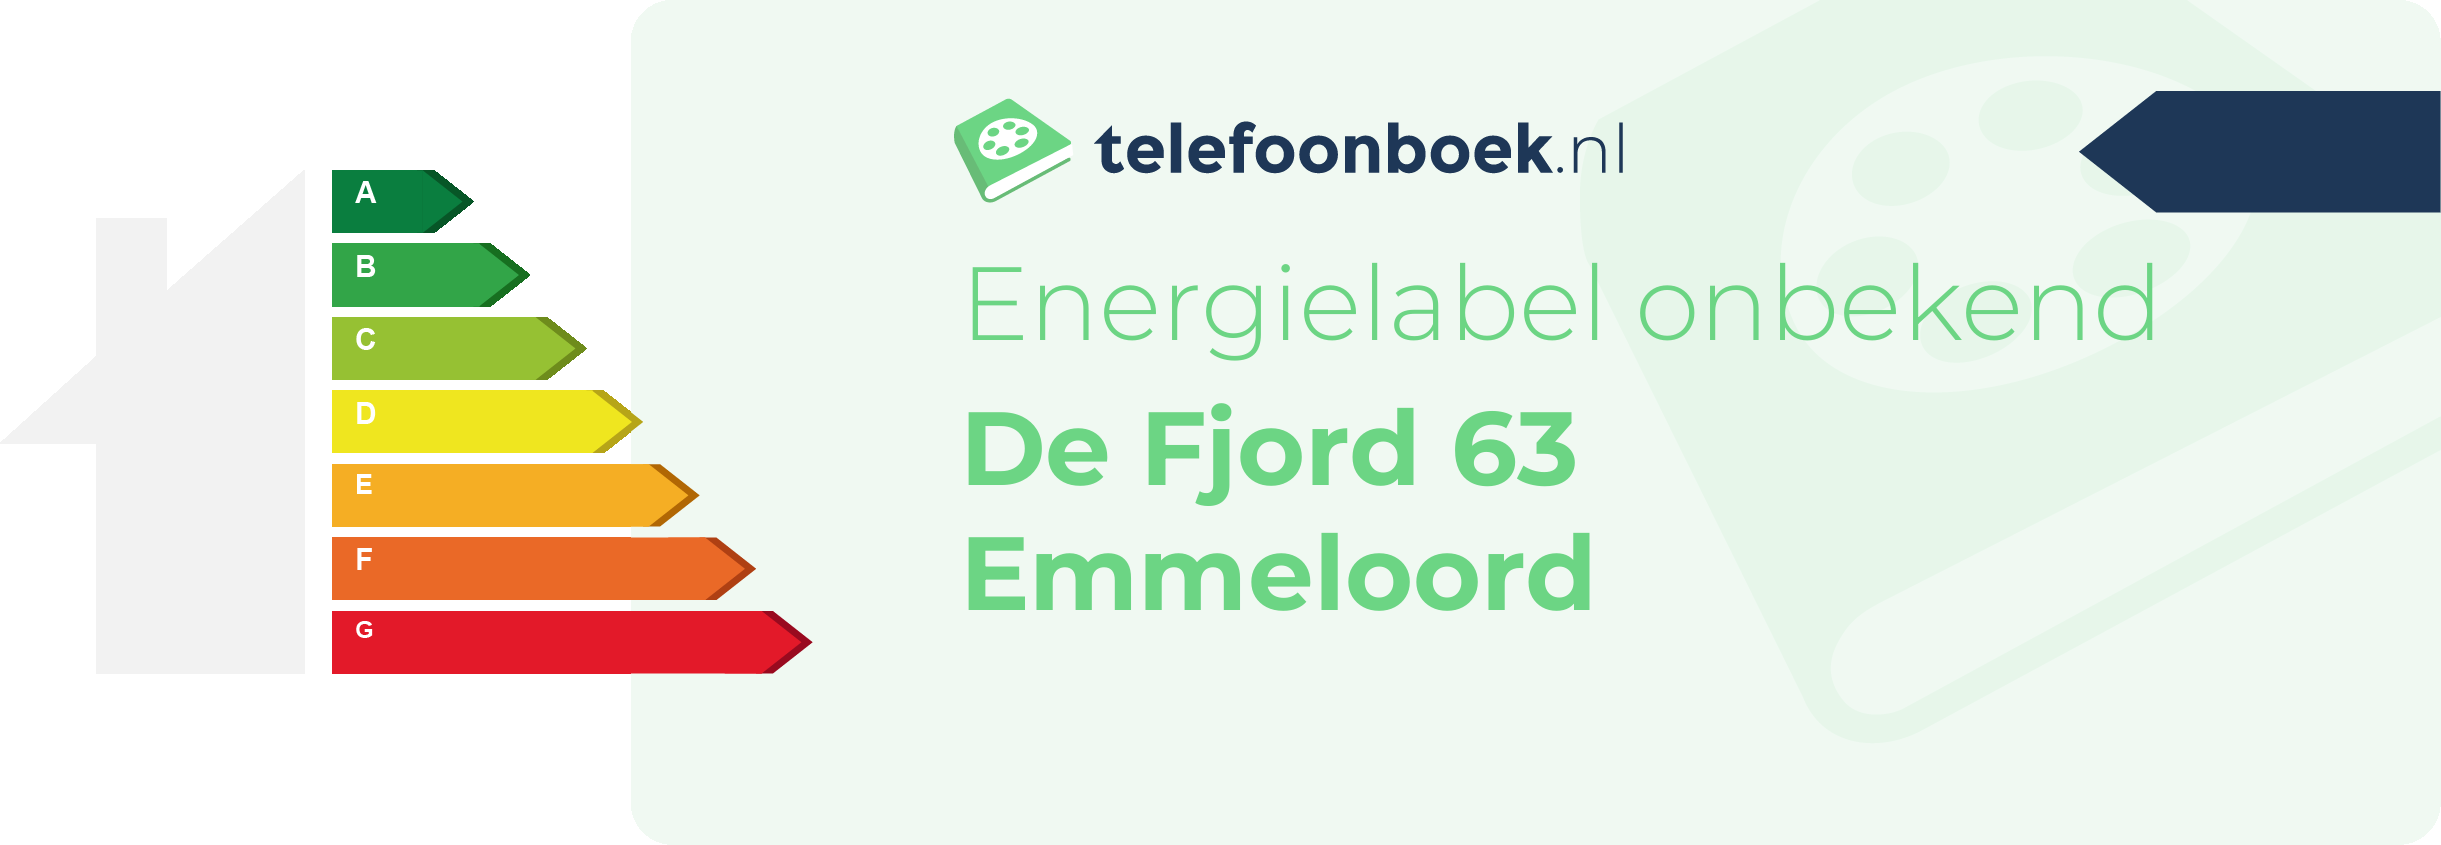 Energielabel De Fjord 63 Emmeloord